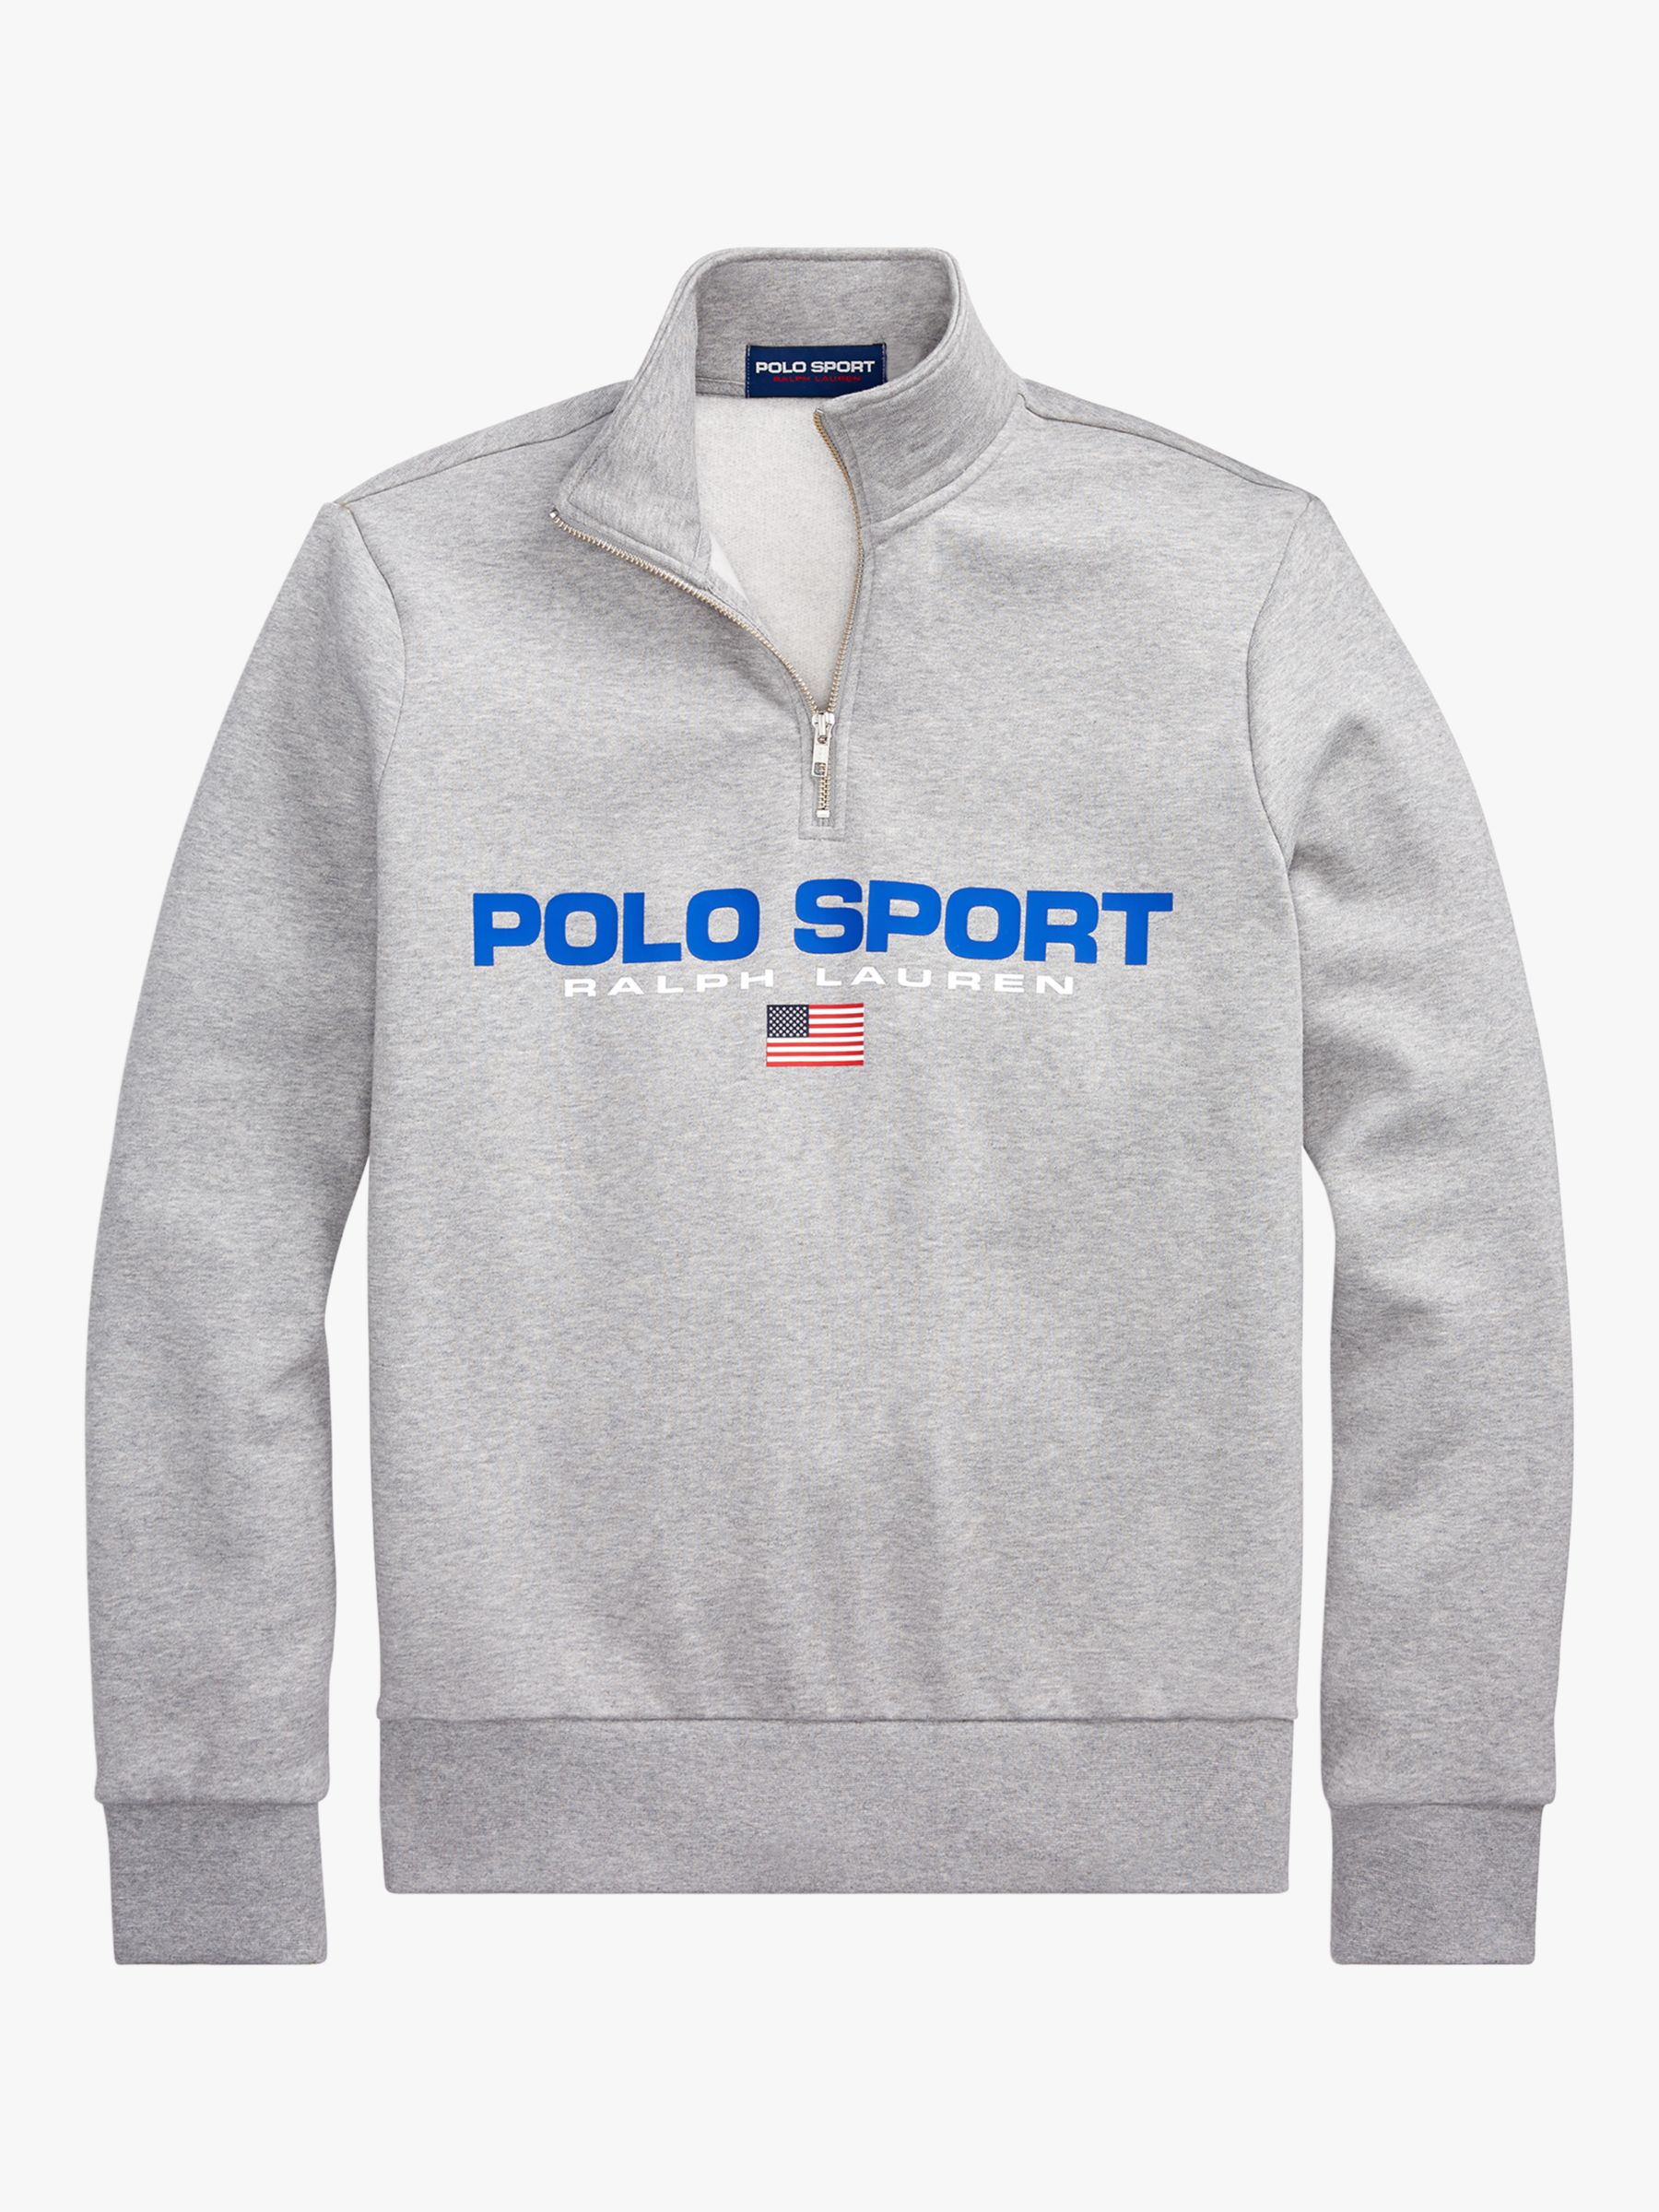 polo sport online